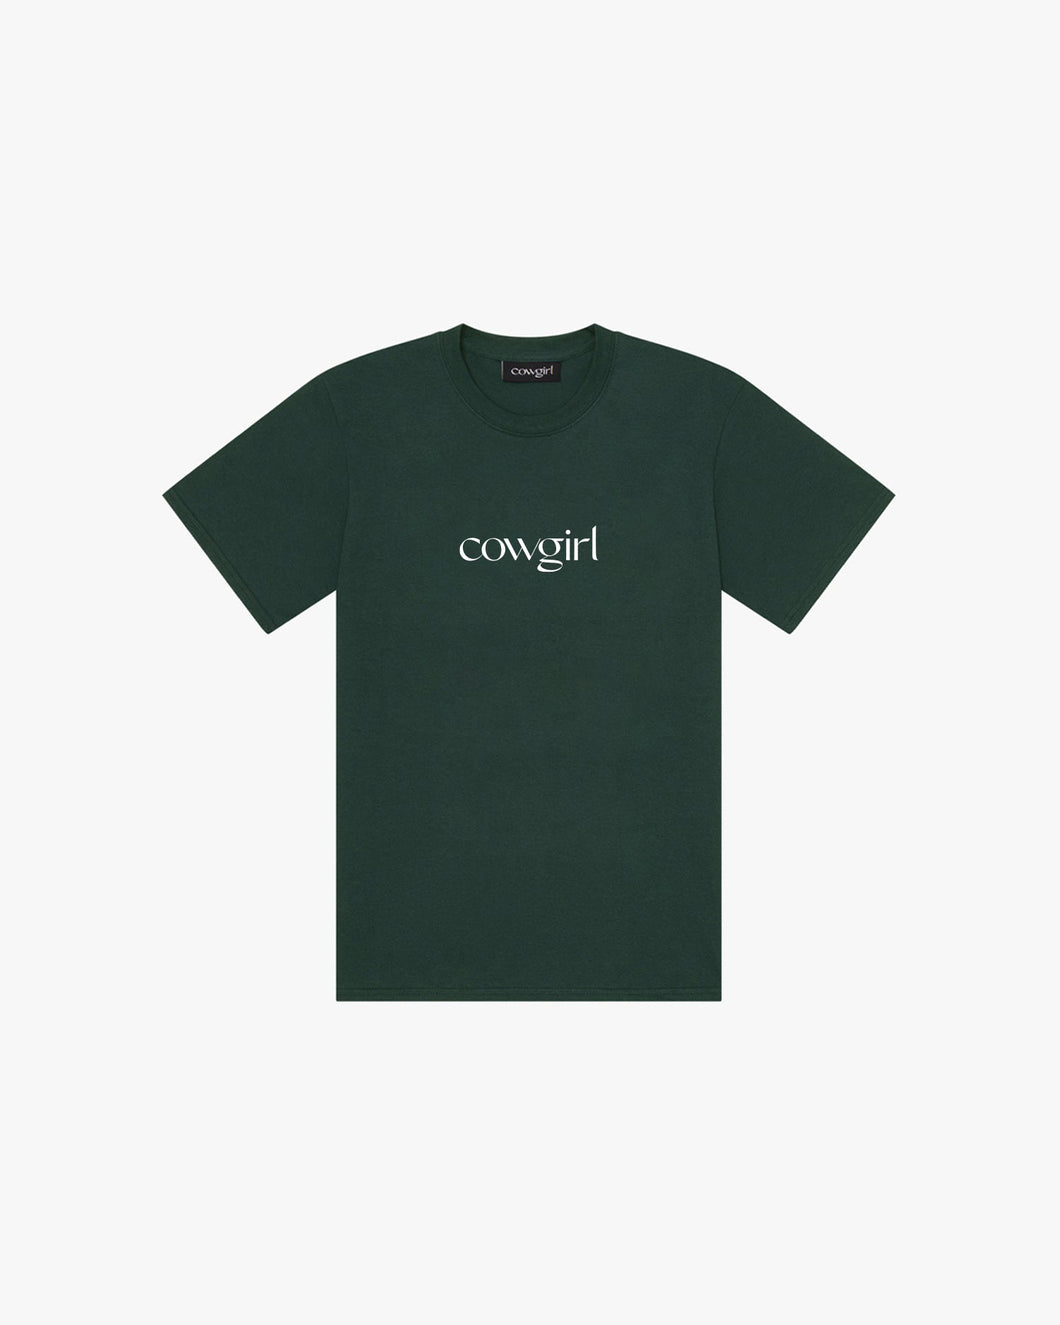 Cowgirl T Shirt (Green, MEDIUM)